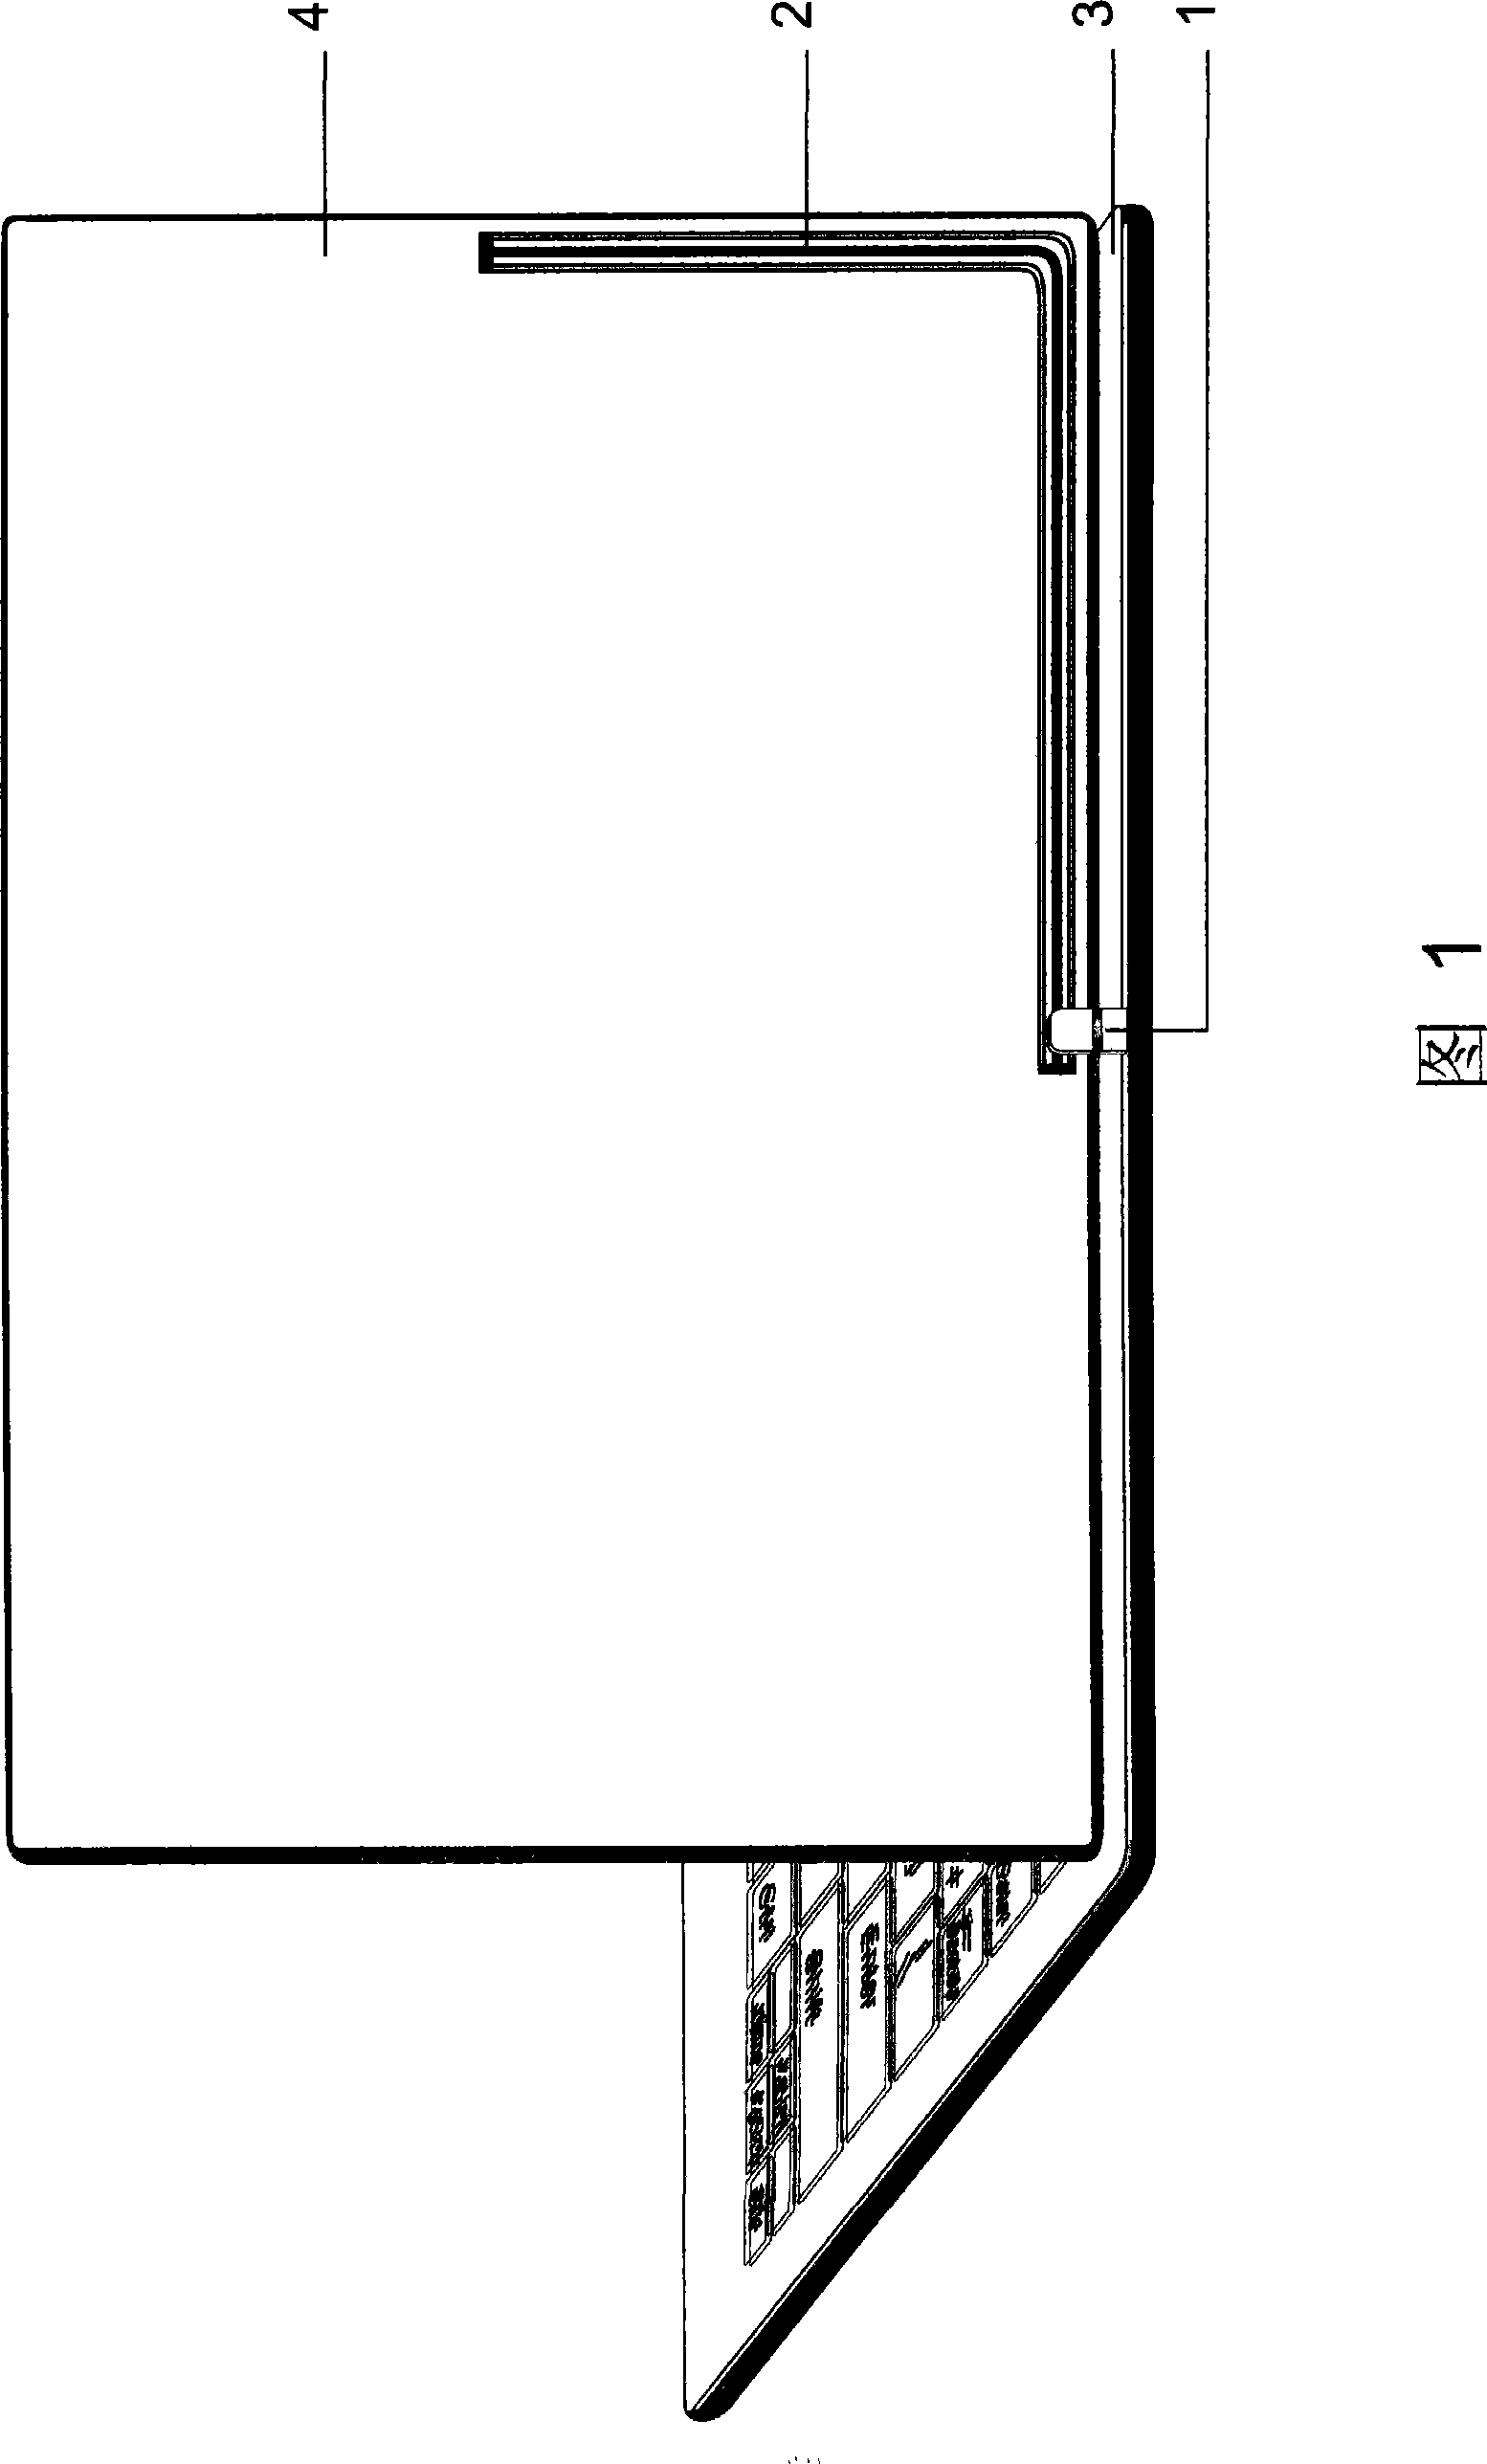 Technical scheme of screen-variable notebook computer